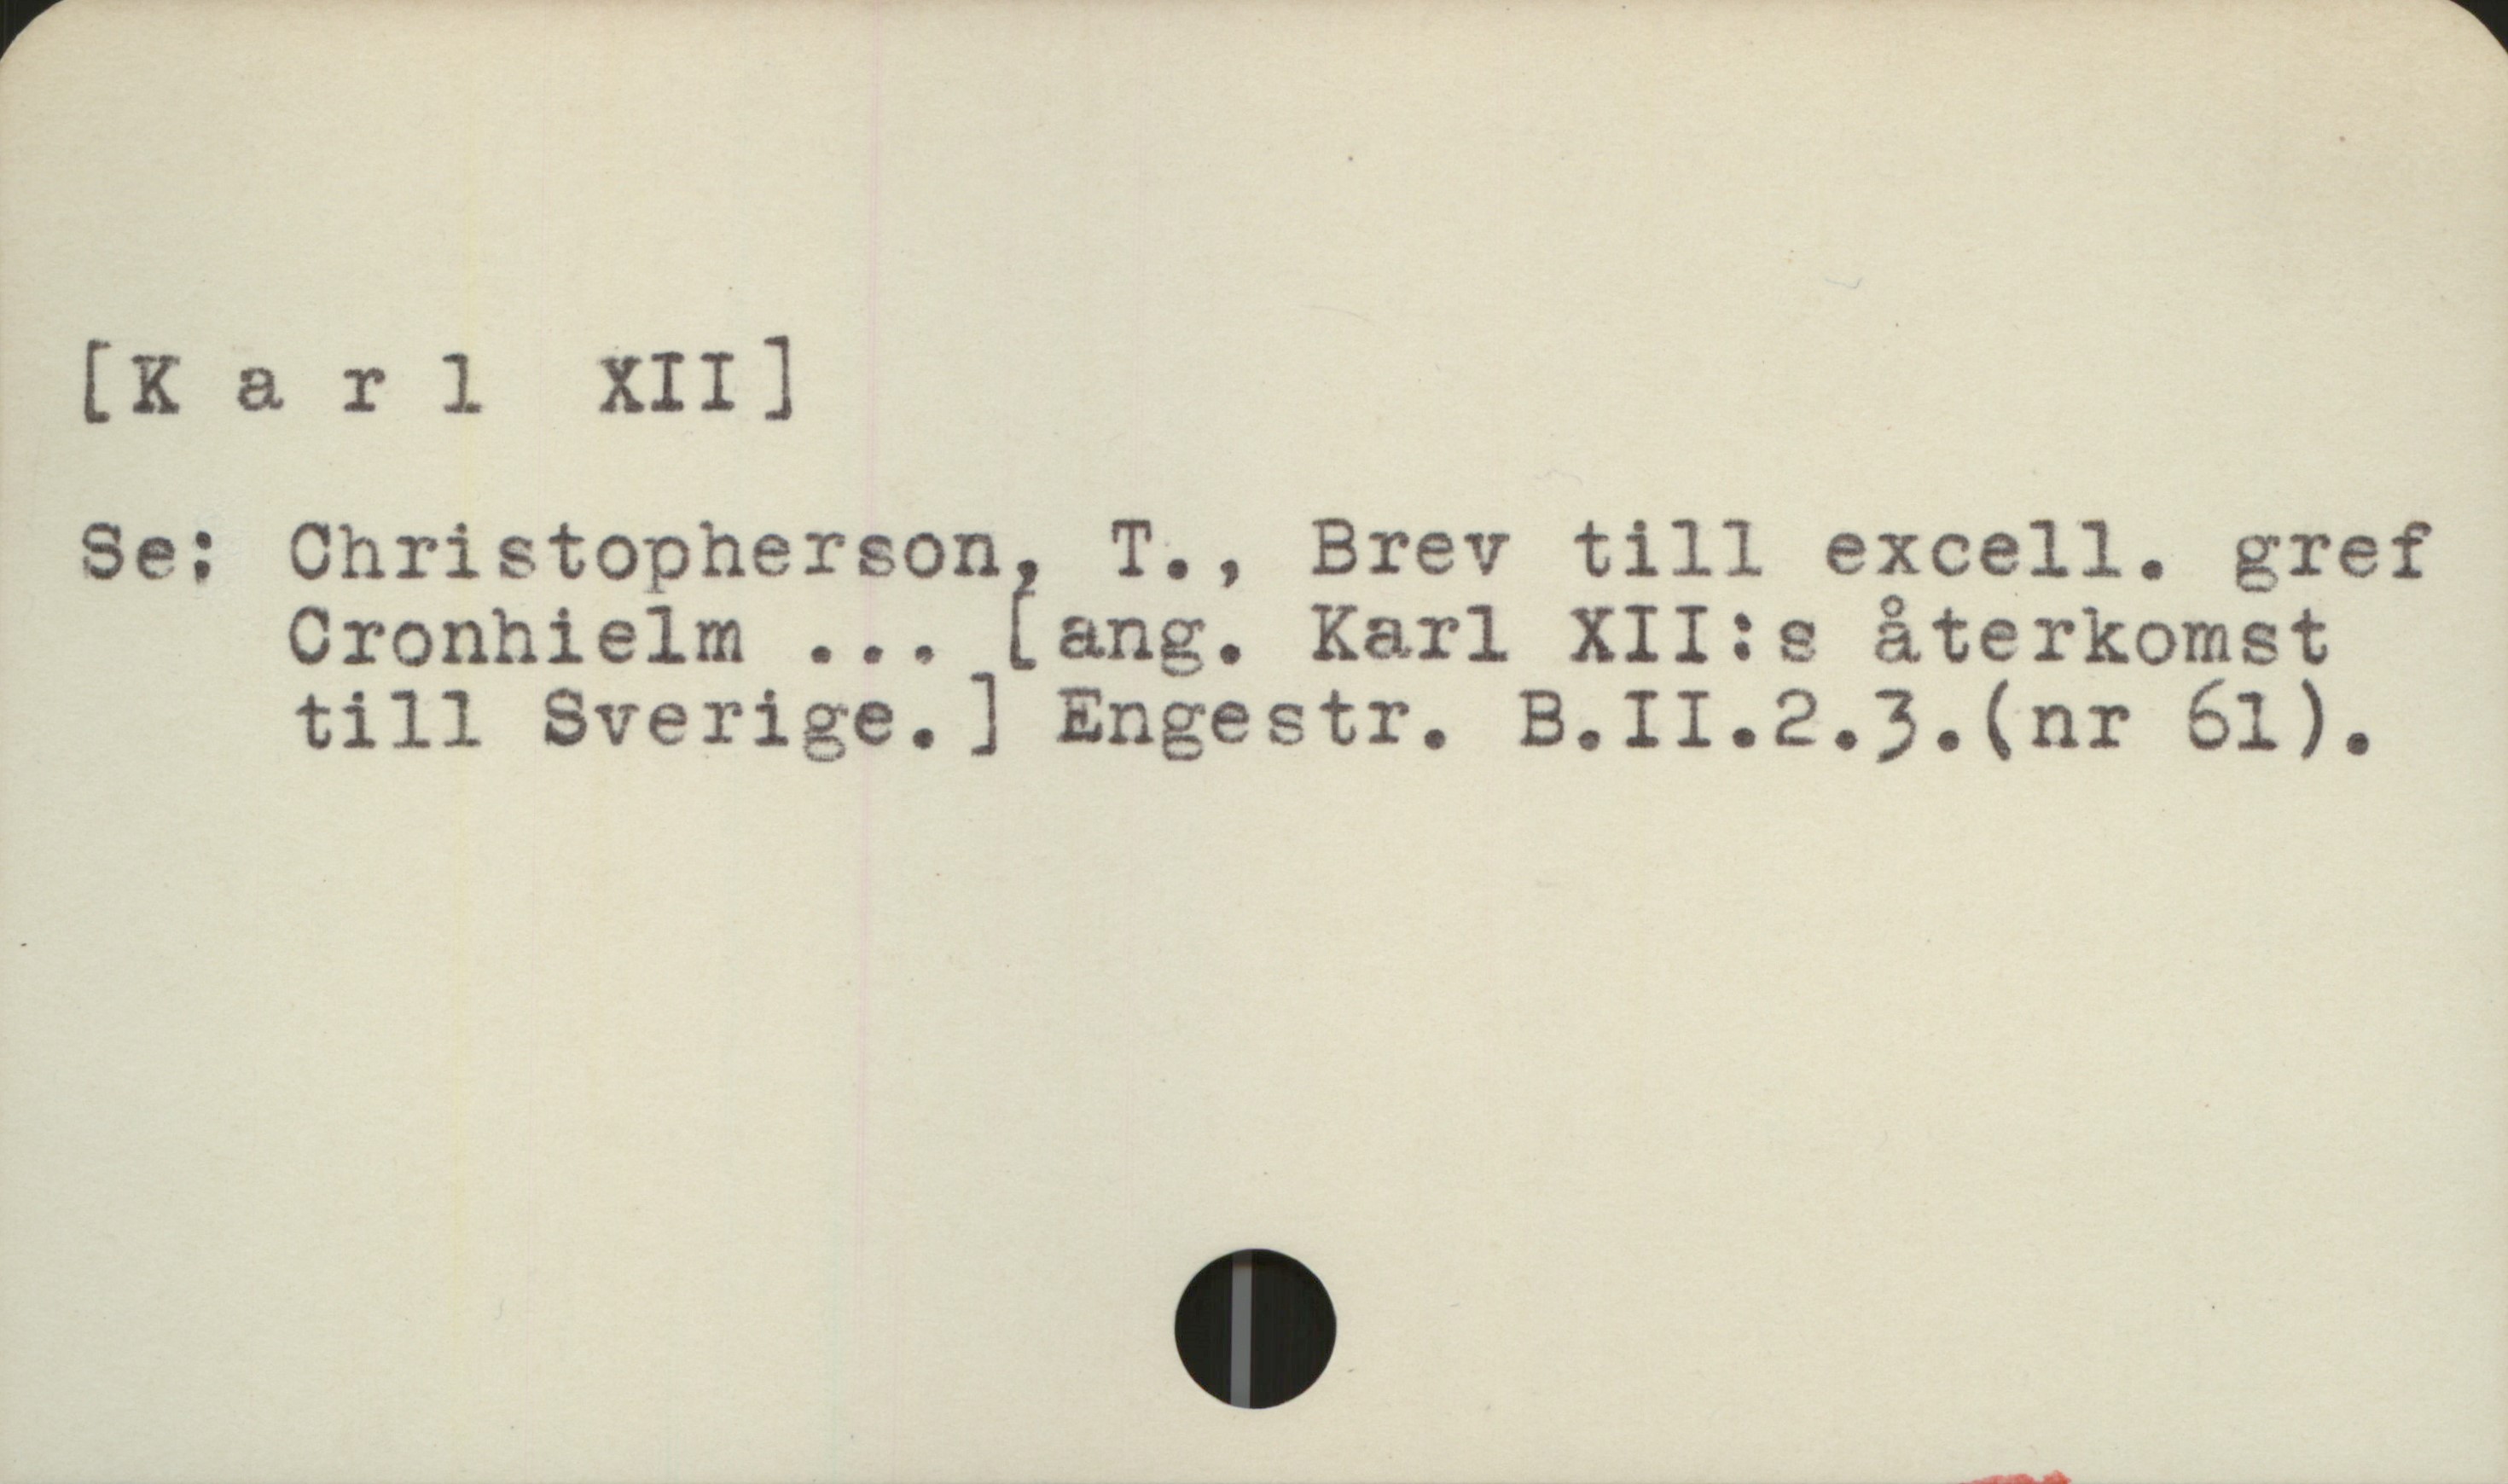  [Karl XII]

Se; Christopherson, T., Brev till excell. gref
Cronhielm ... tang. Karl XII:s återkomst
till Sverige.] Engestr. B.II.2.3.(nr 61).

